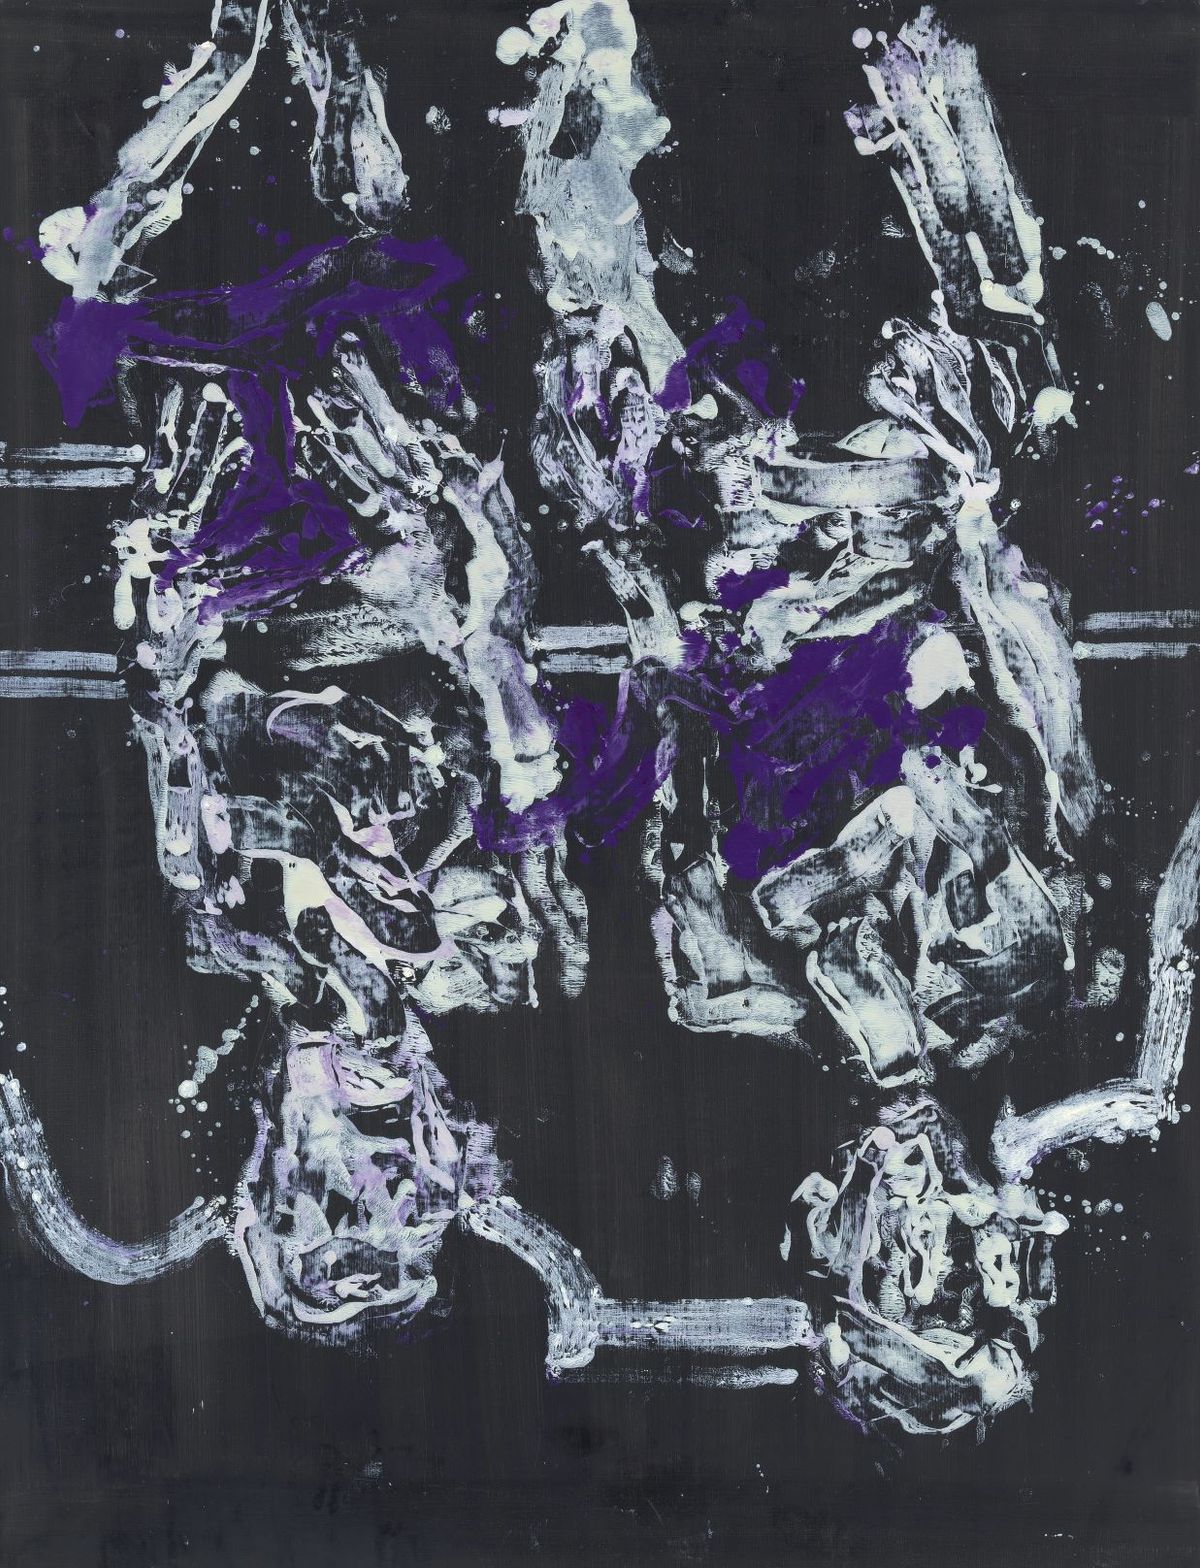 Georg Baselitz, X-ray lila, 2020, huile sur toile. Courtesy de l’artiste et galerie Thaddaeus Ropac. Photo Jochen Littkemann.